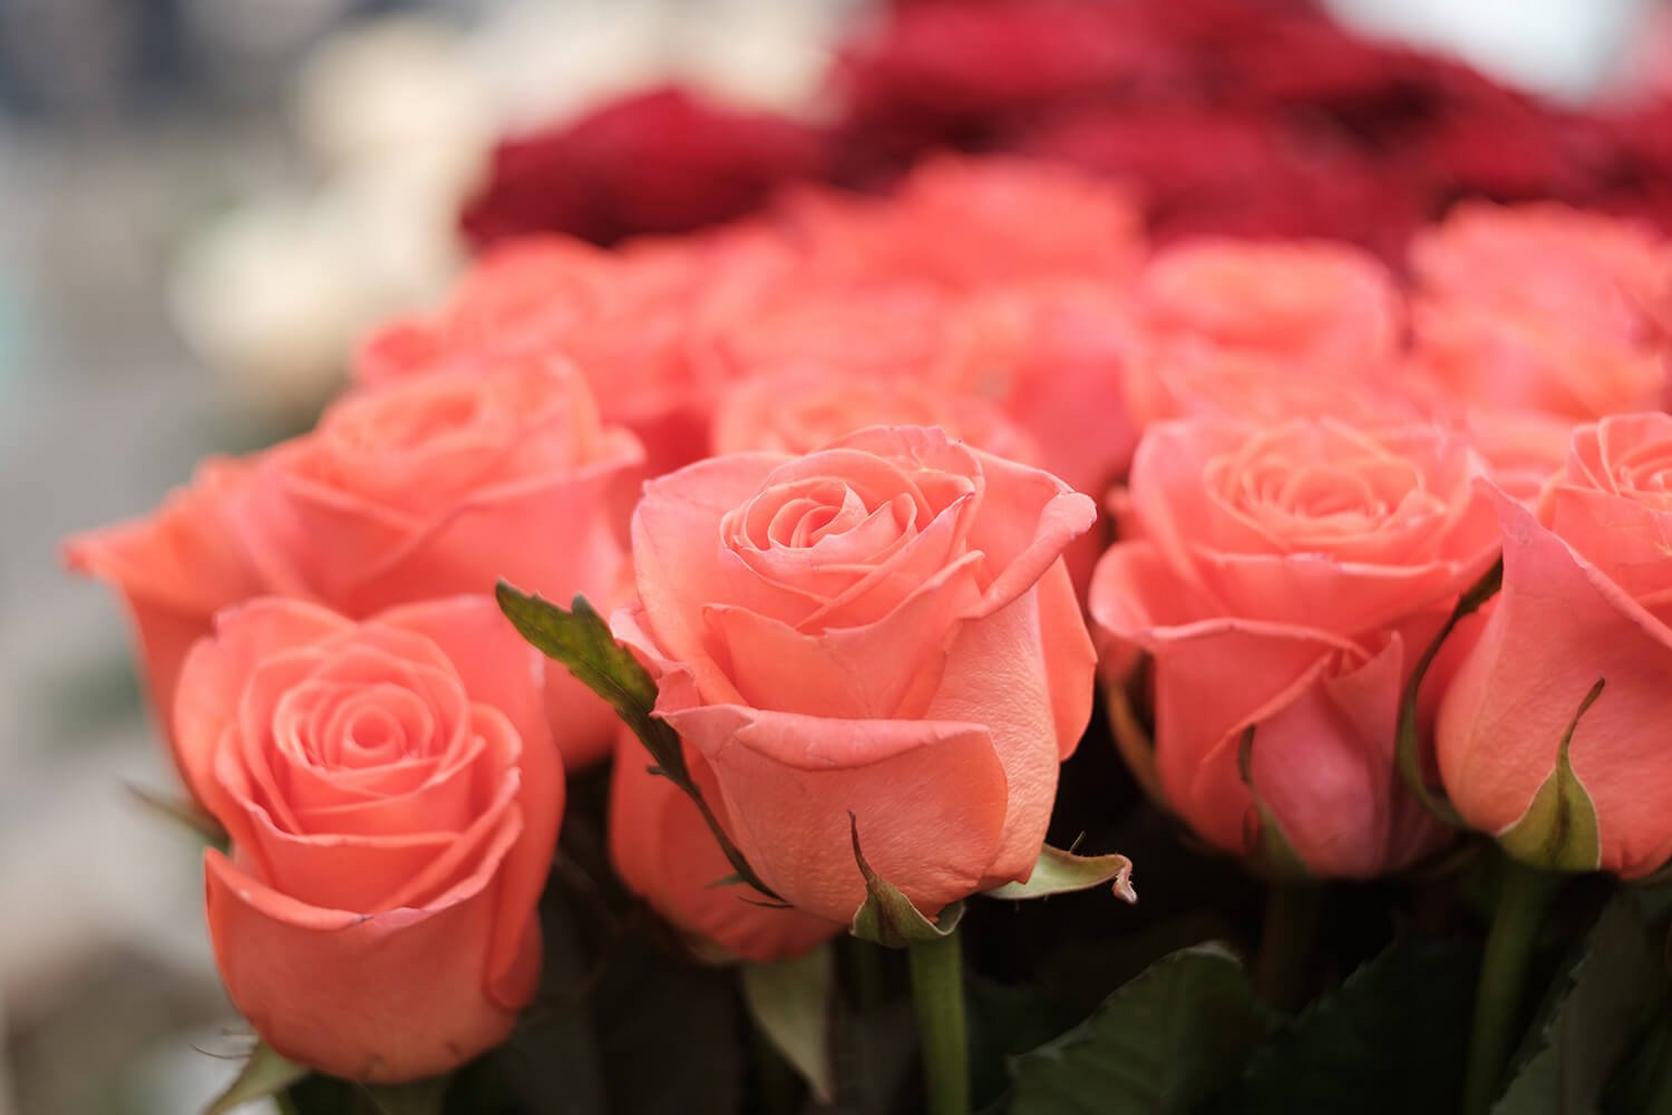 Understanding Rose Blossom Fullness